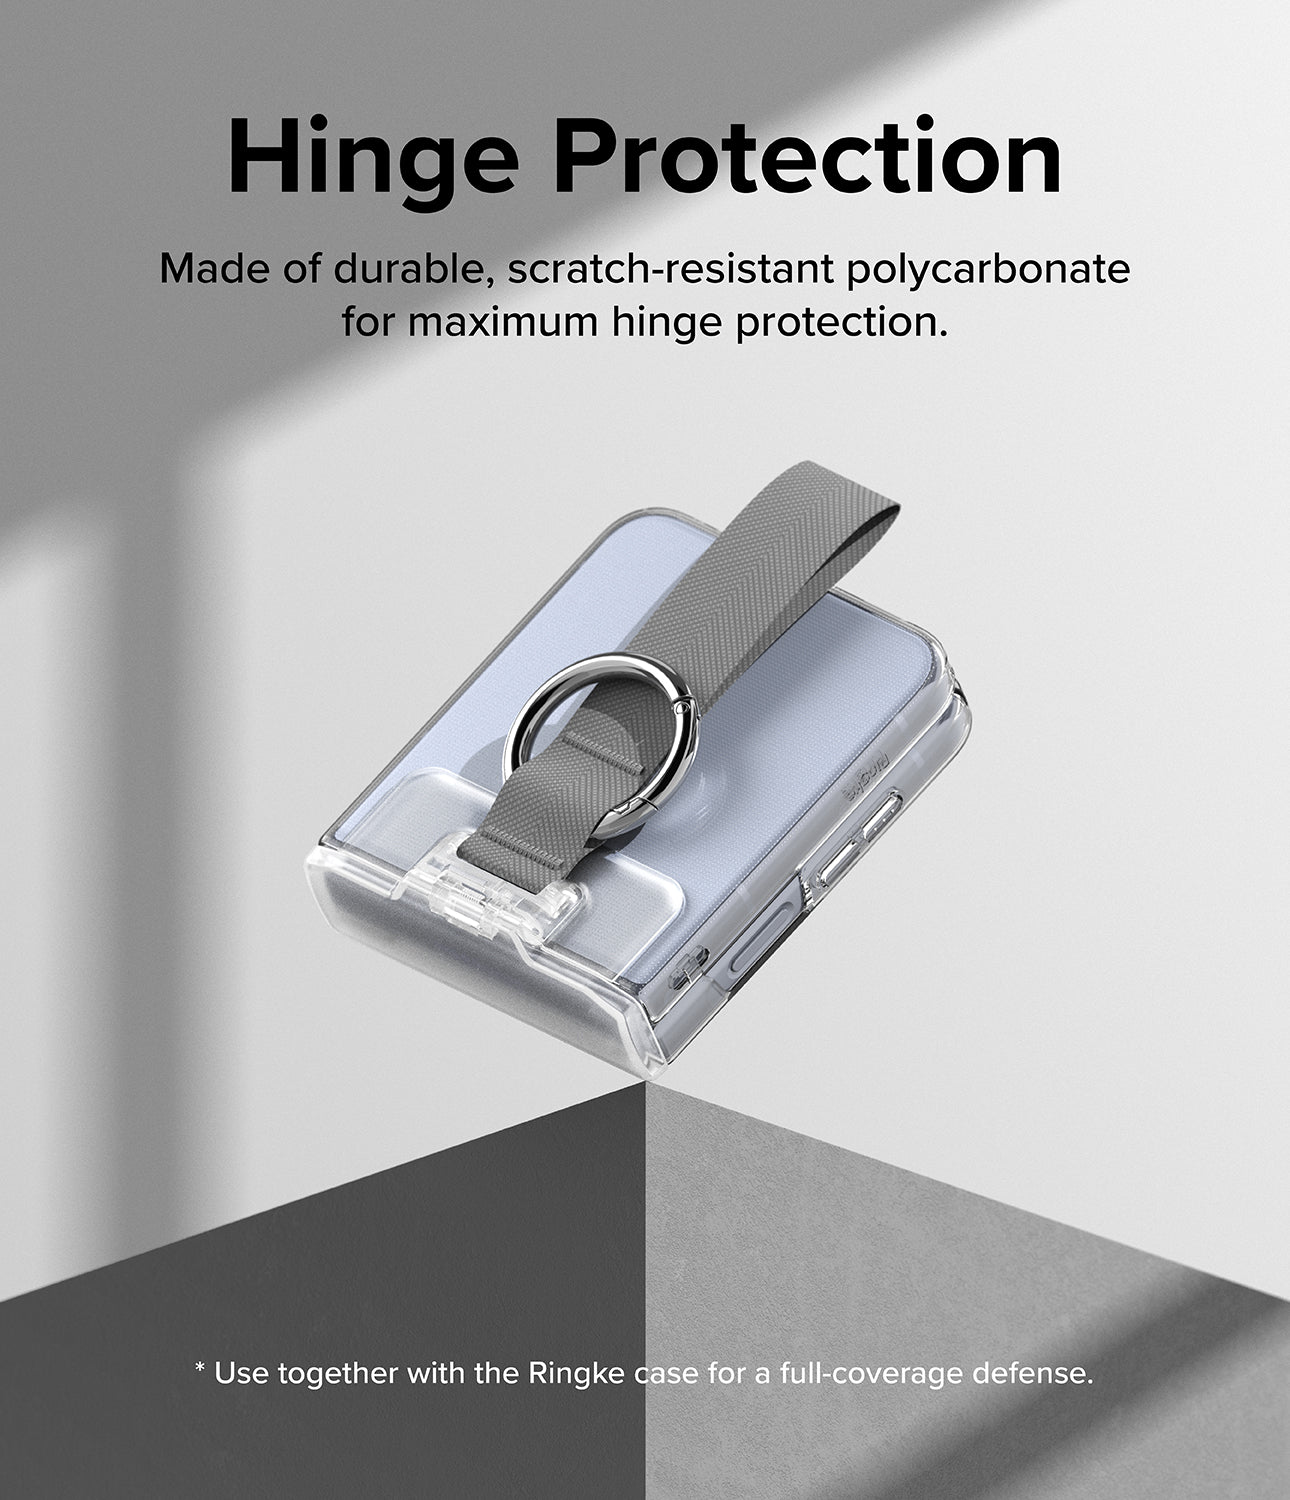 Hinge Protection